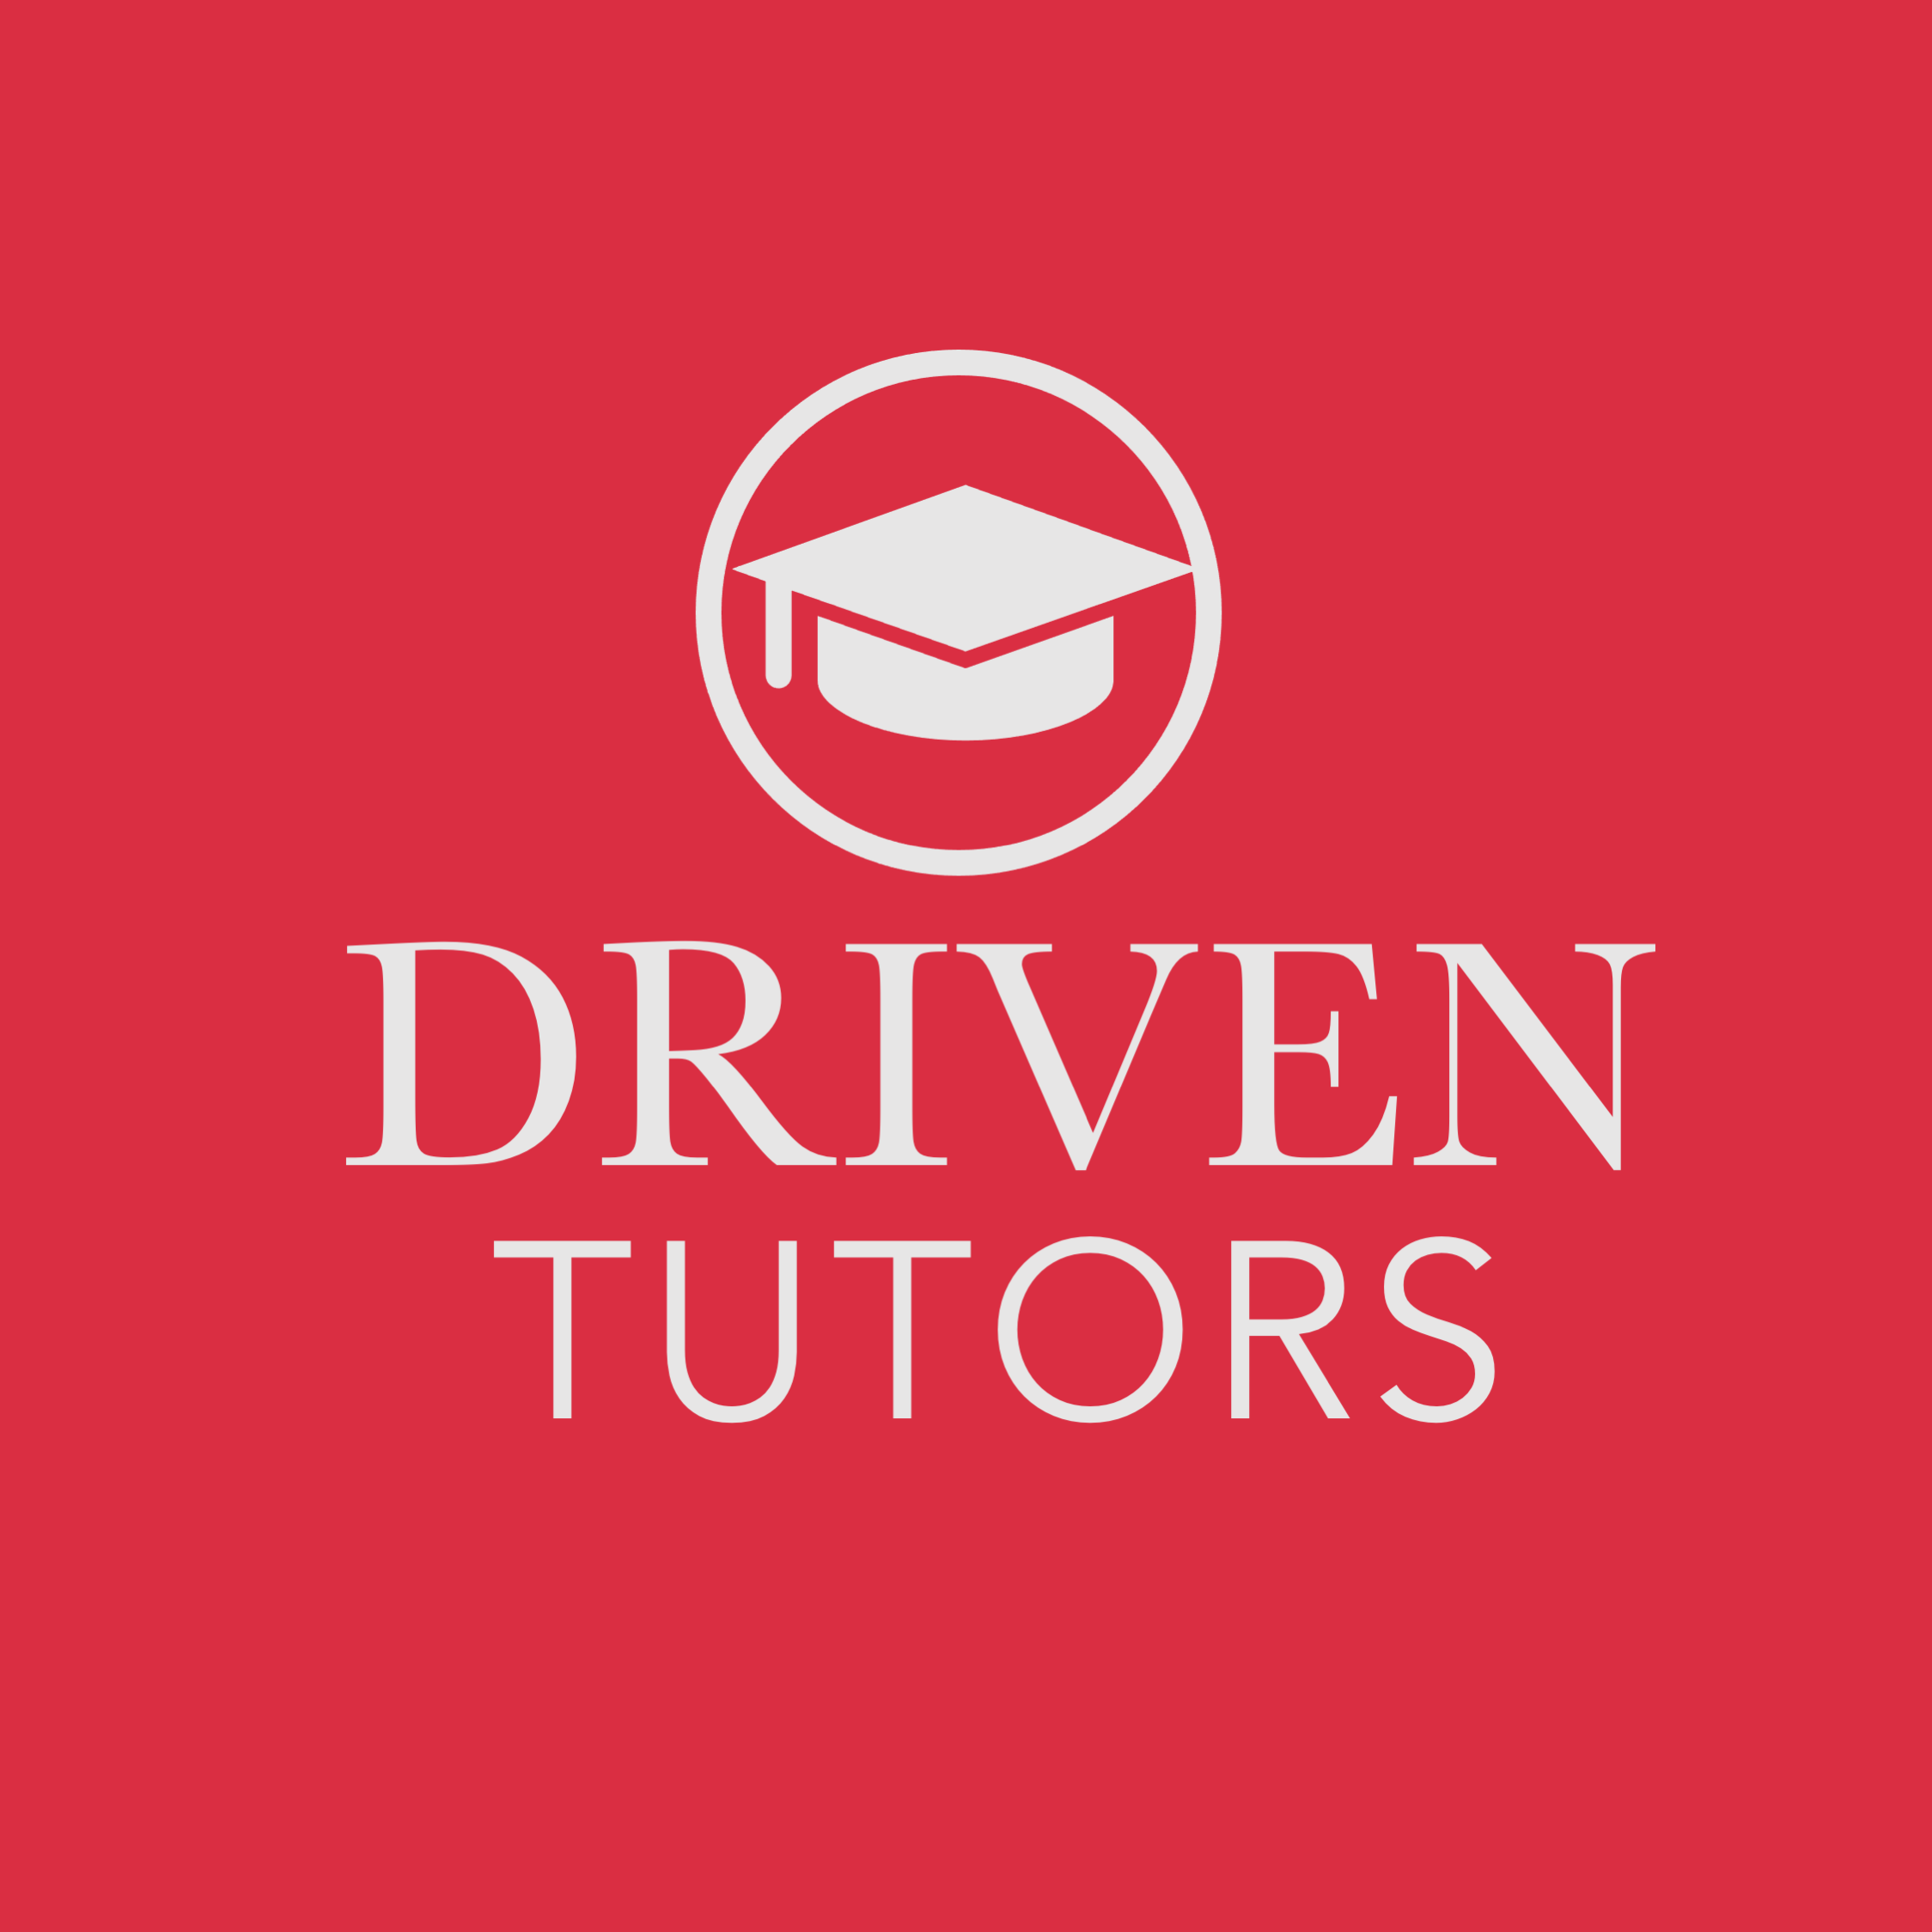 The company logo for Driven Tutors